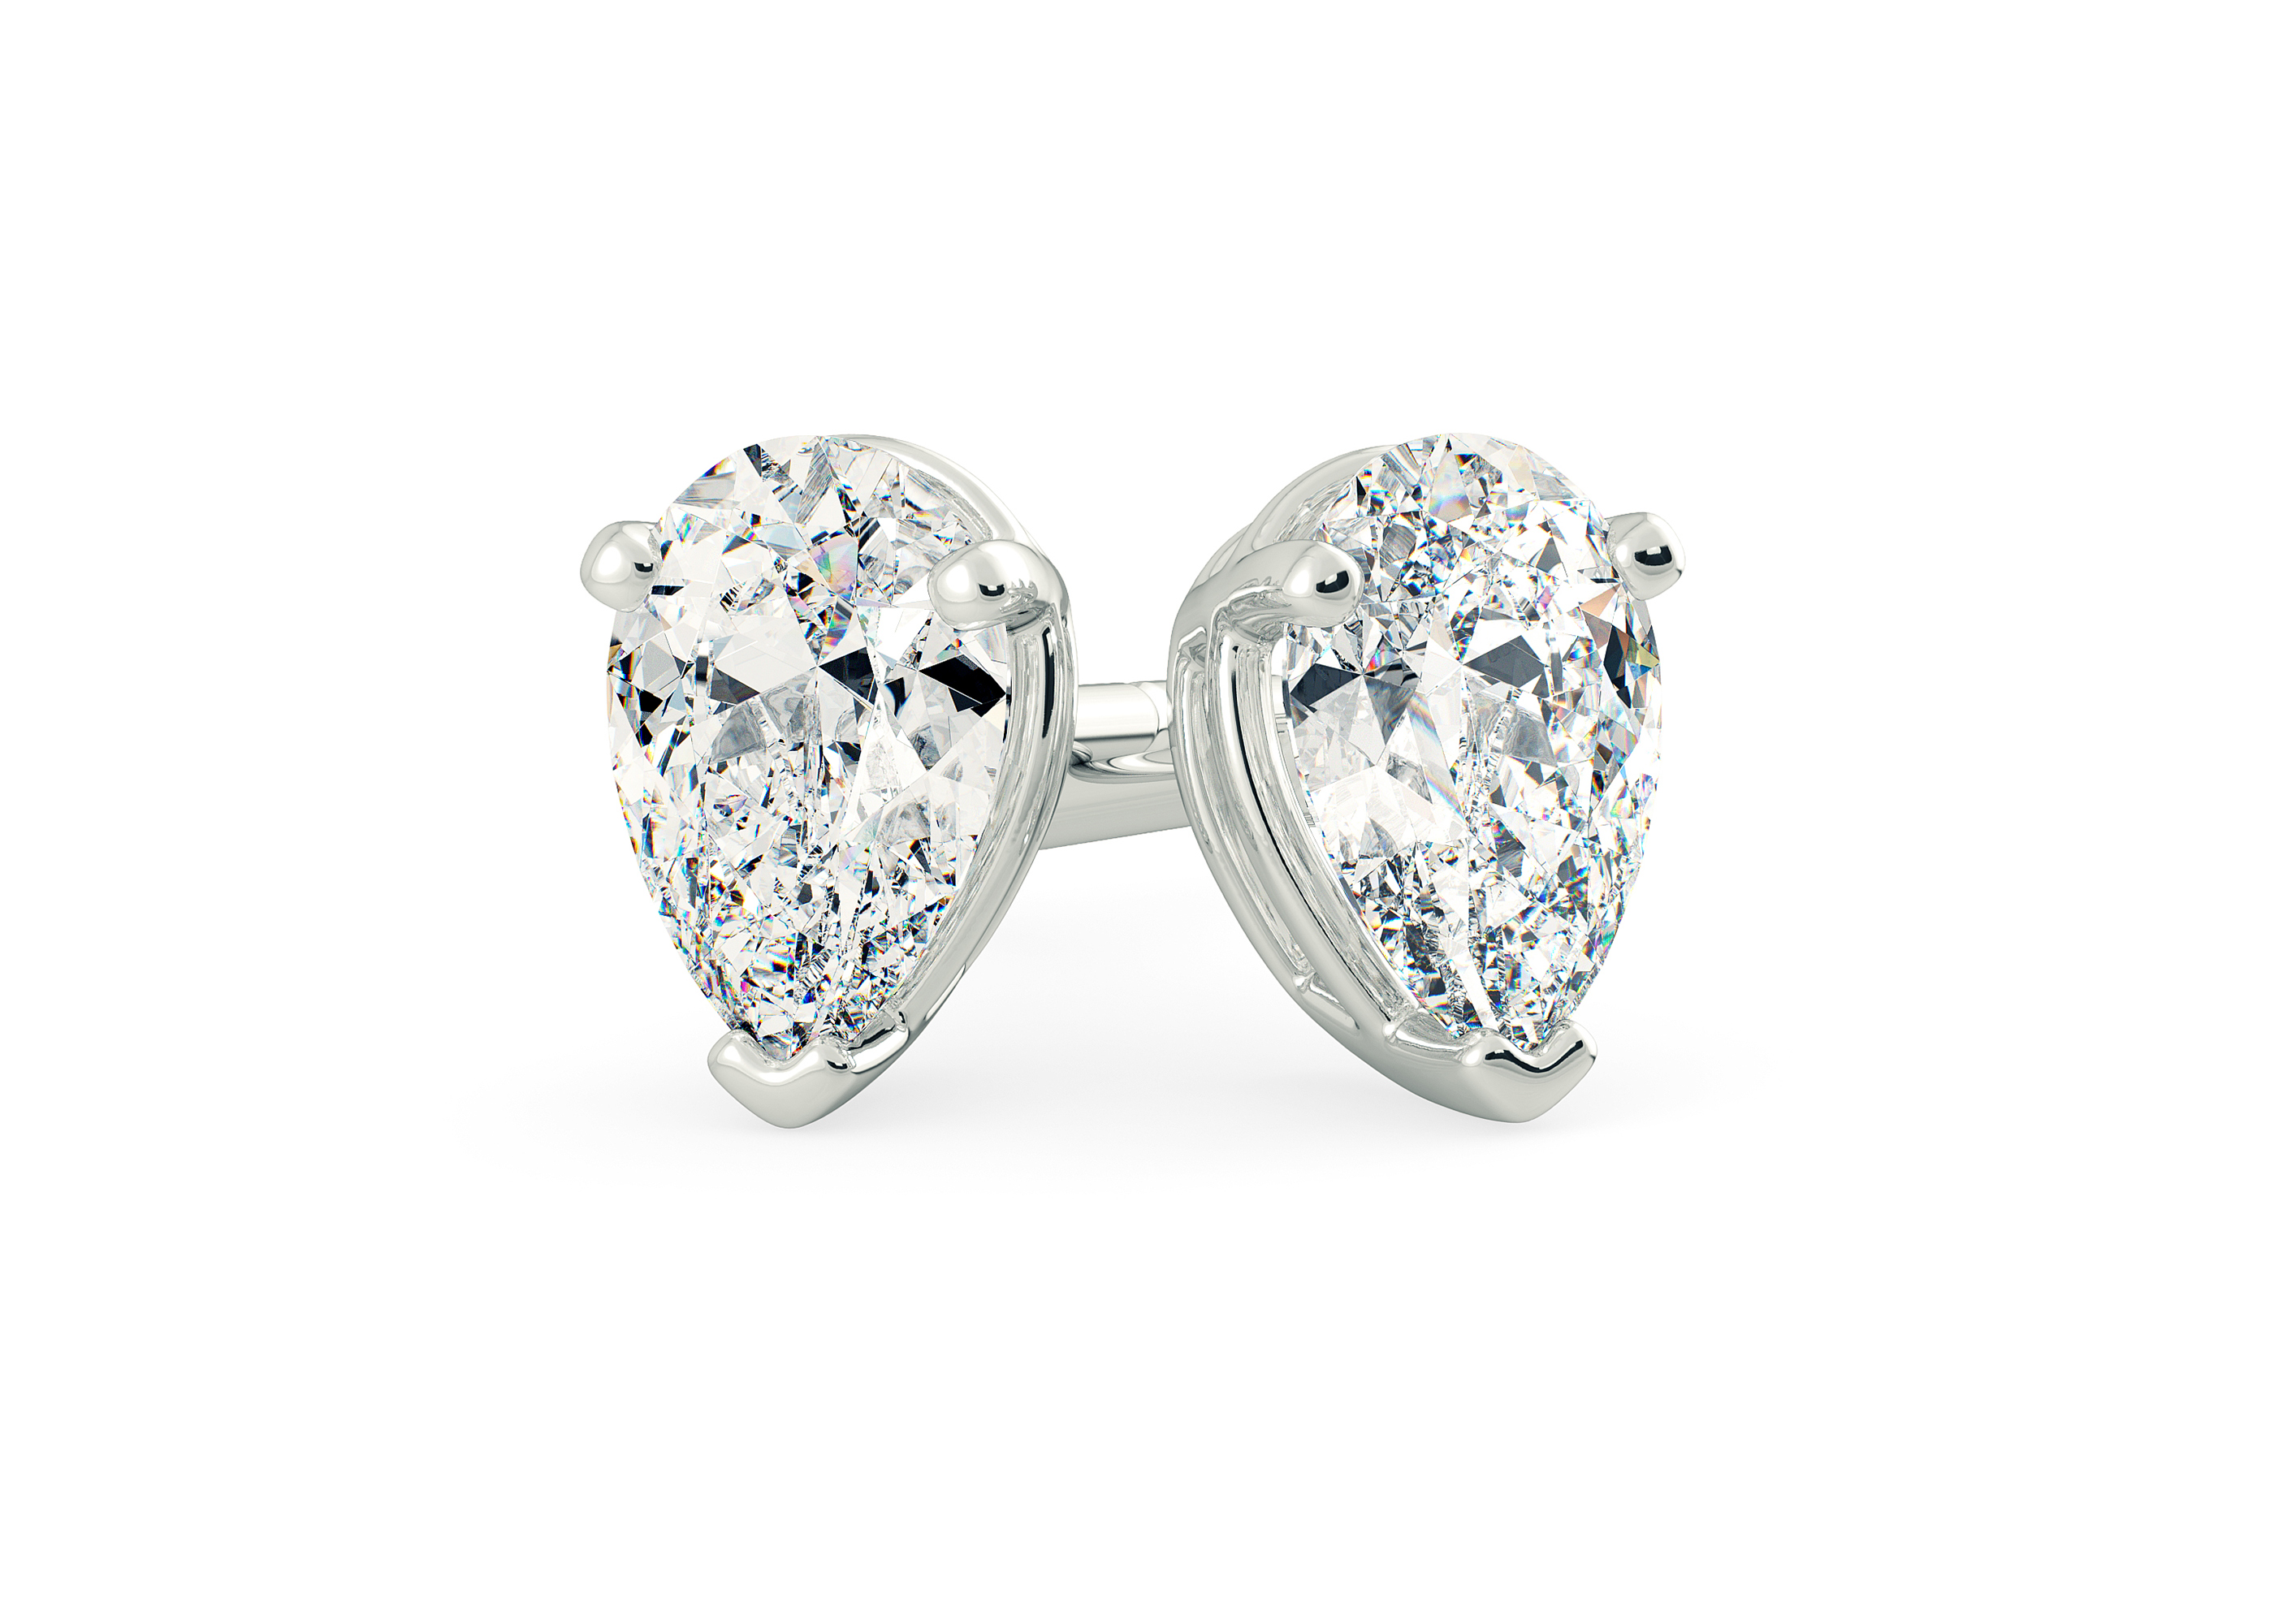 Ettore Pear Diamond Stud Earrings in 18K White Gold with Screw Backs